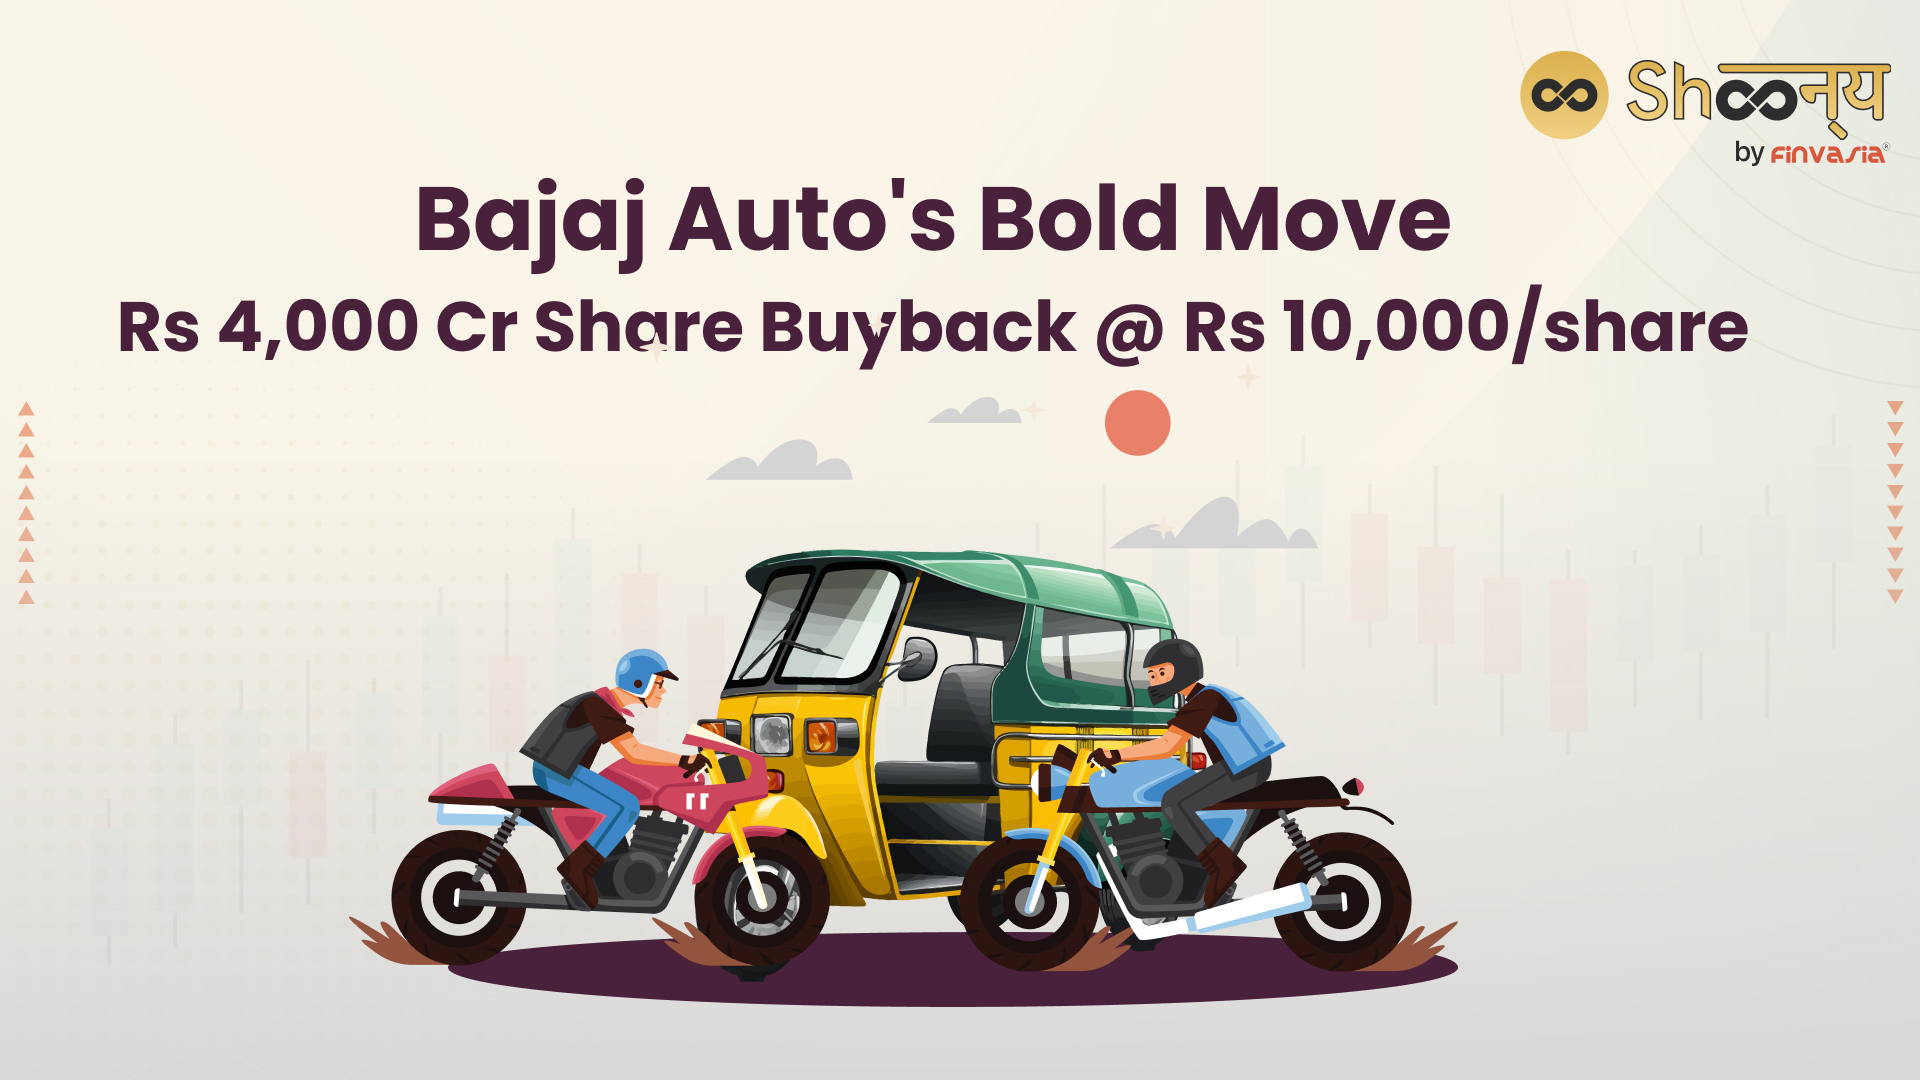 Bajaj Auto Share Buyback: Rs 4,000 Crore Approval